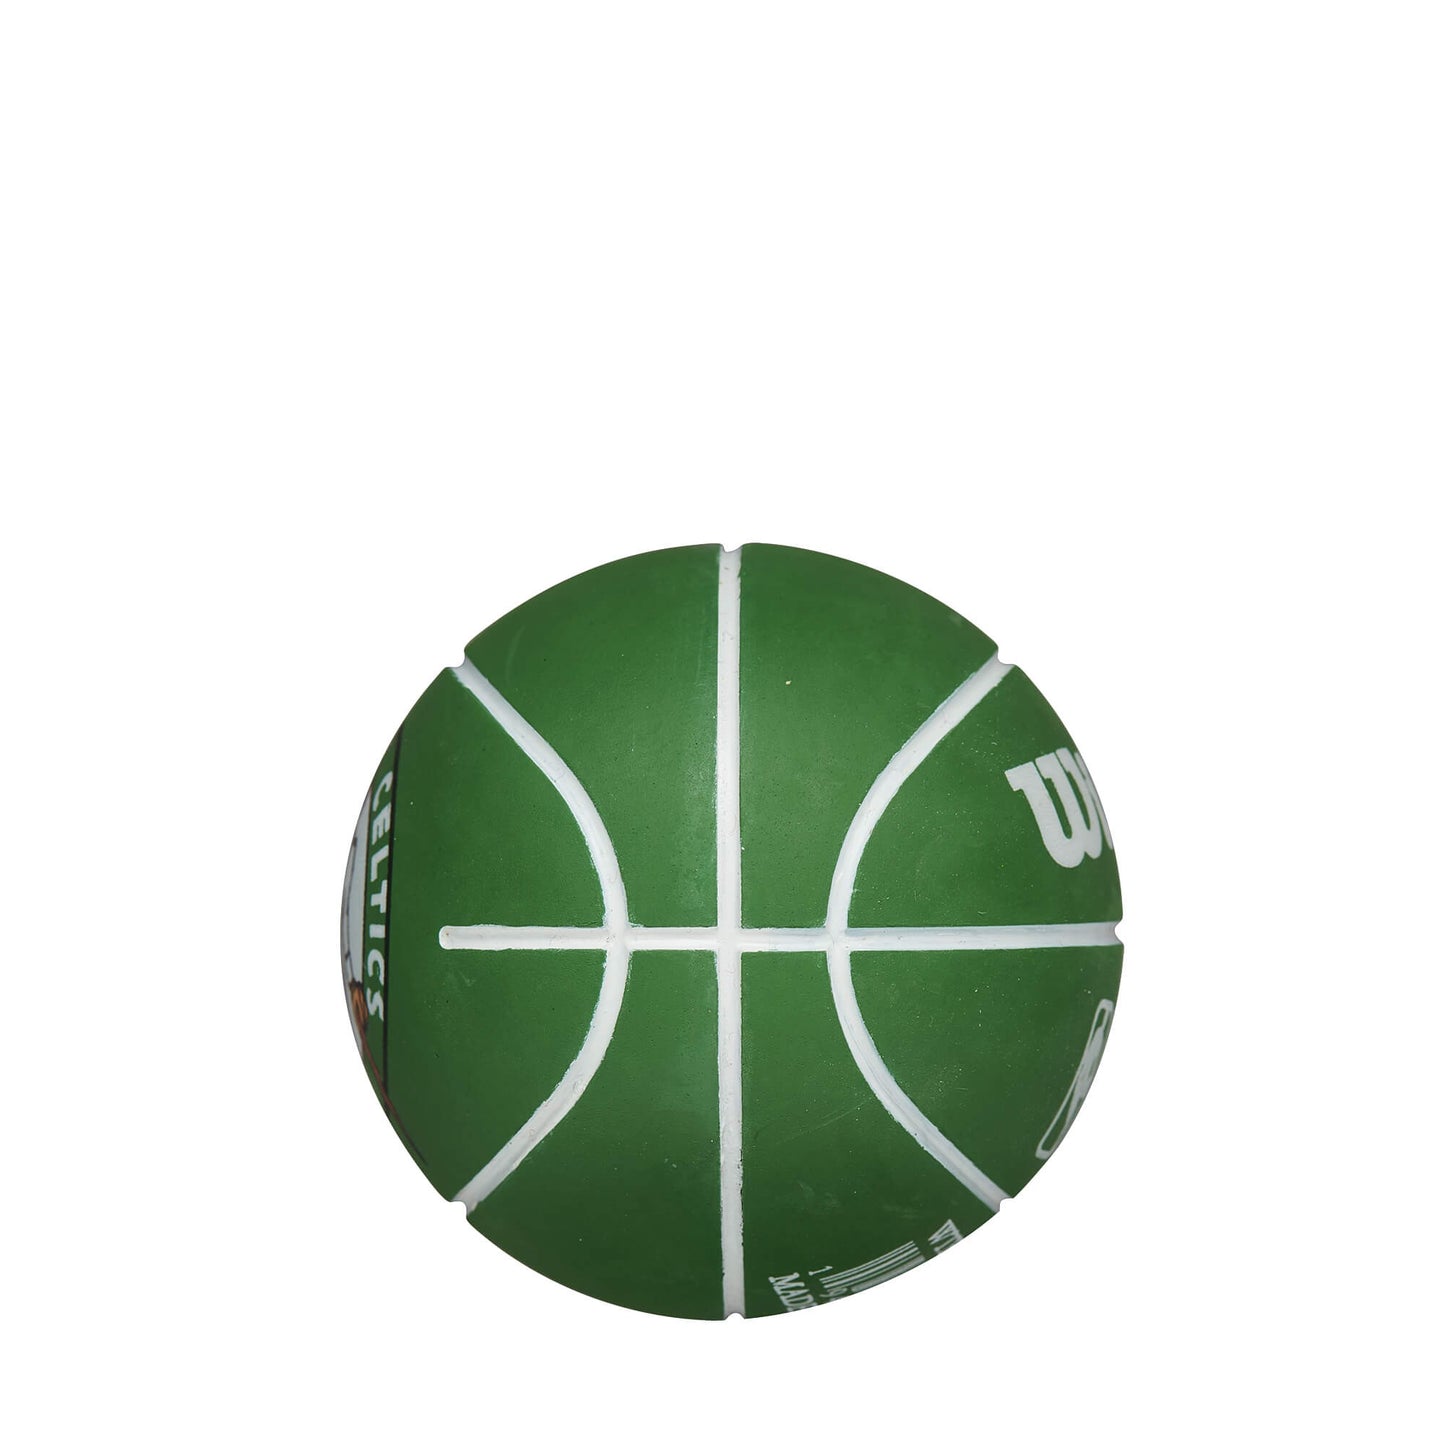 Wilson NBA Dribbler Basketball Boston Celtics (sz. super mini)